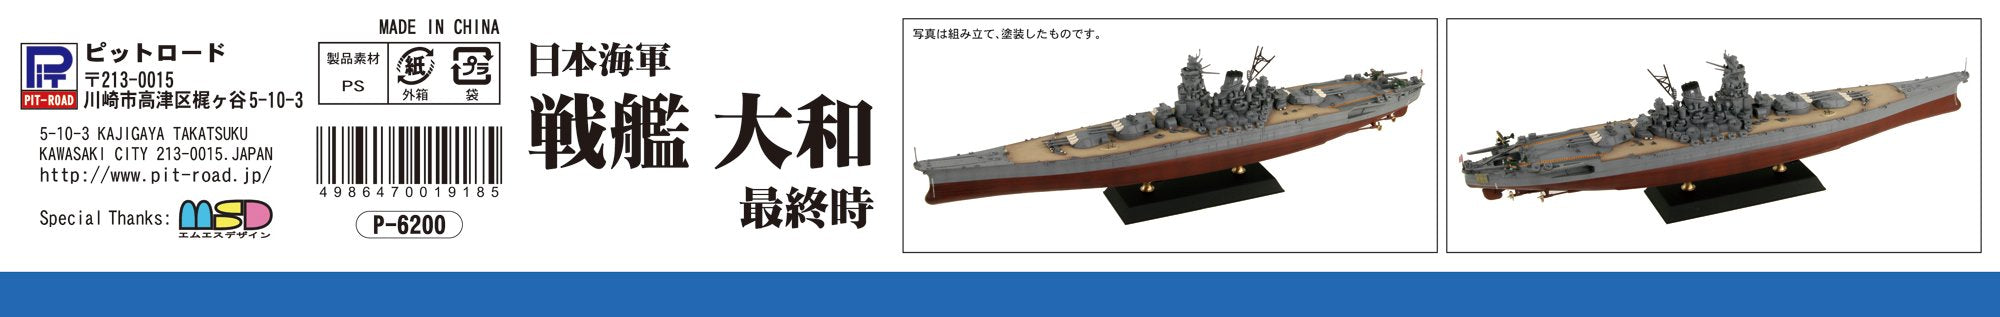 Pit Road 1/700 Ijn Battleship Yamato 1945 Japanese Plastic Scale Ship Model